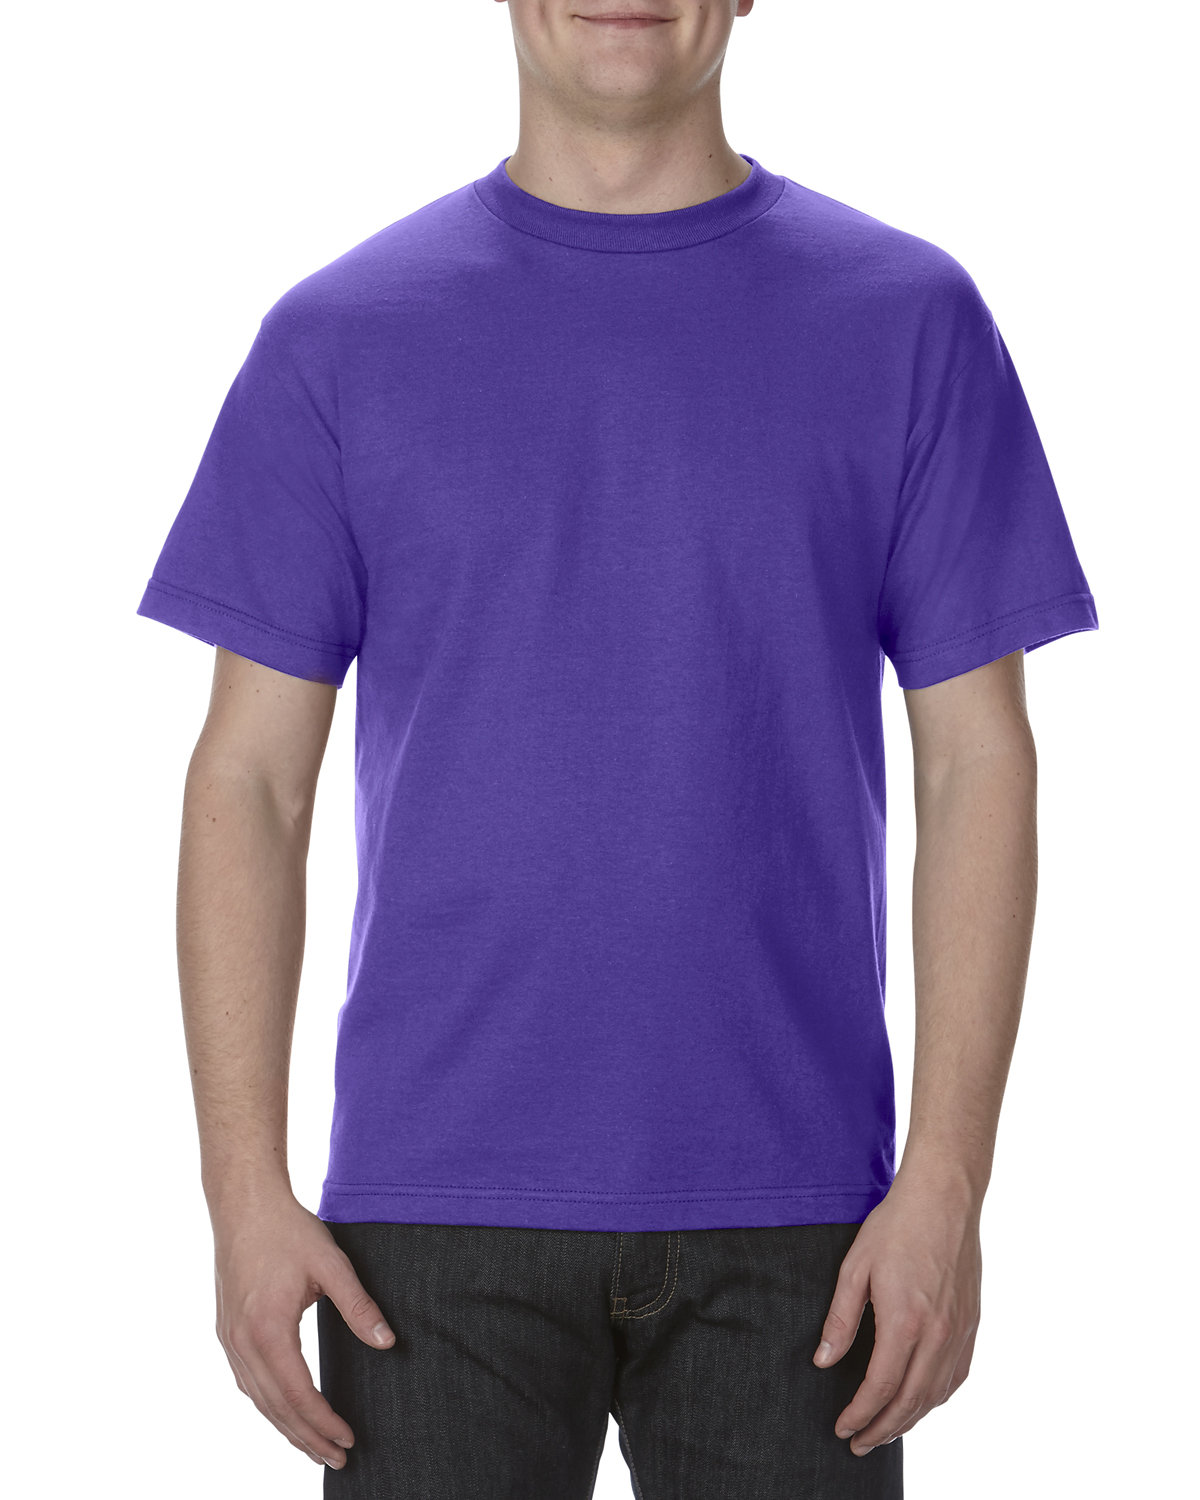 American Apparel Adult 6.0 oz., 100% Cotton T-Shirt PURPLE 